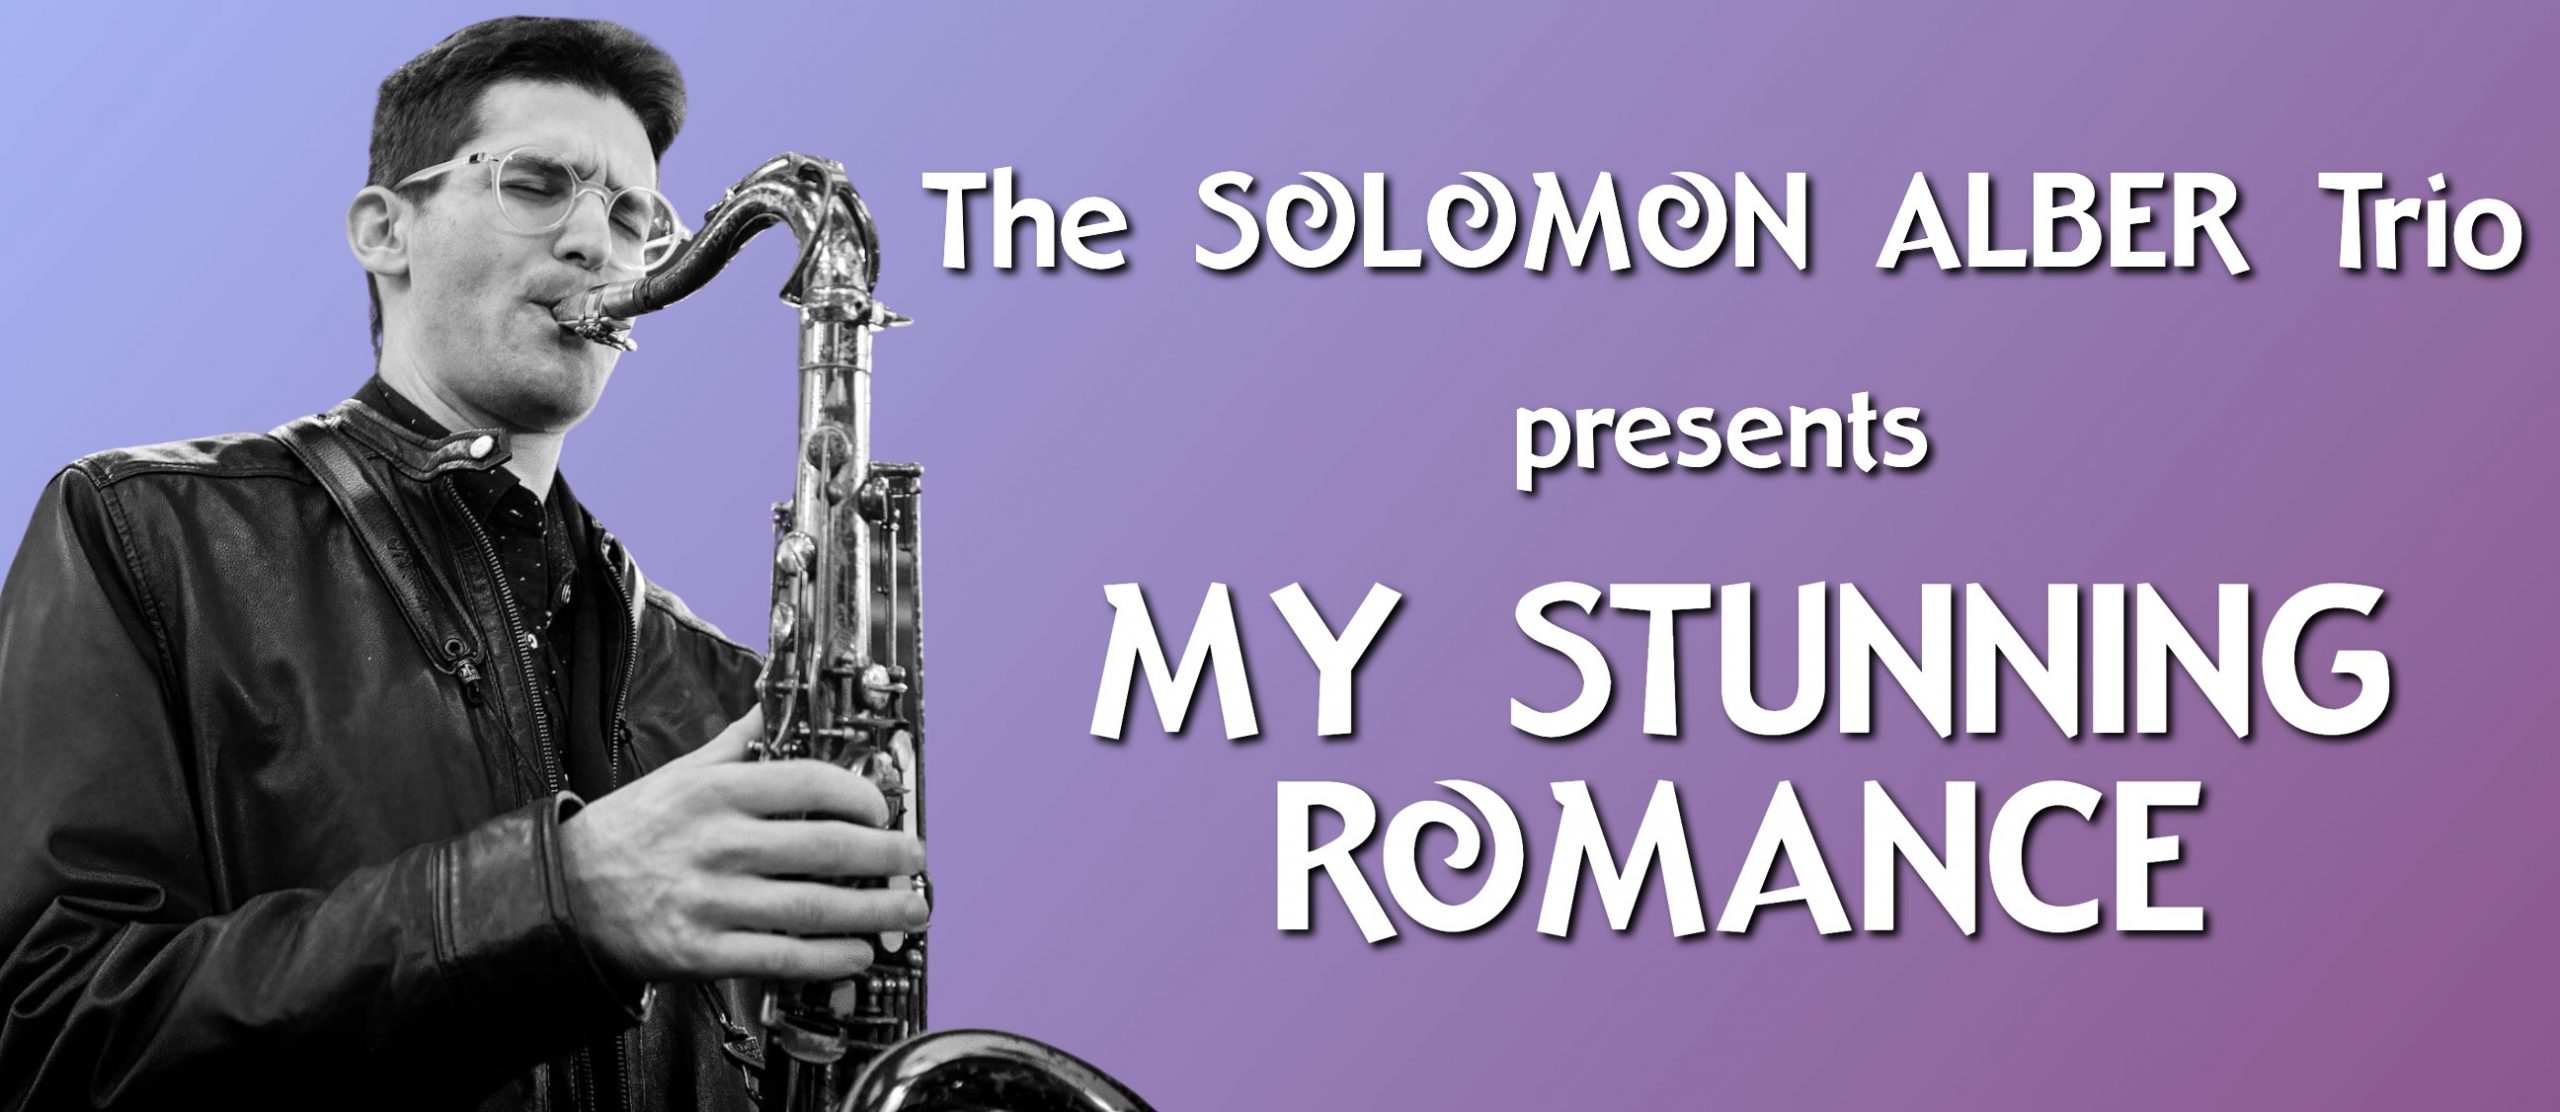 Solomon Alber Trio Presents "My Stunning Romance"